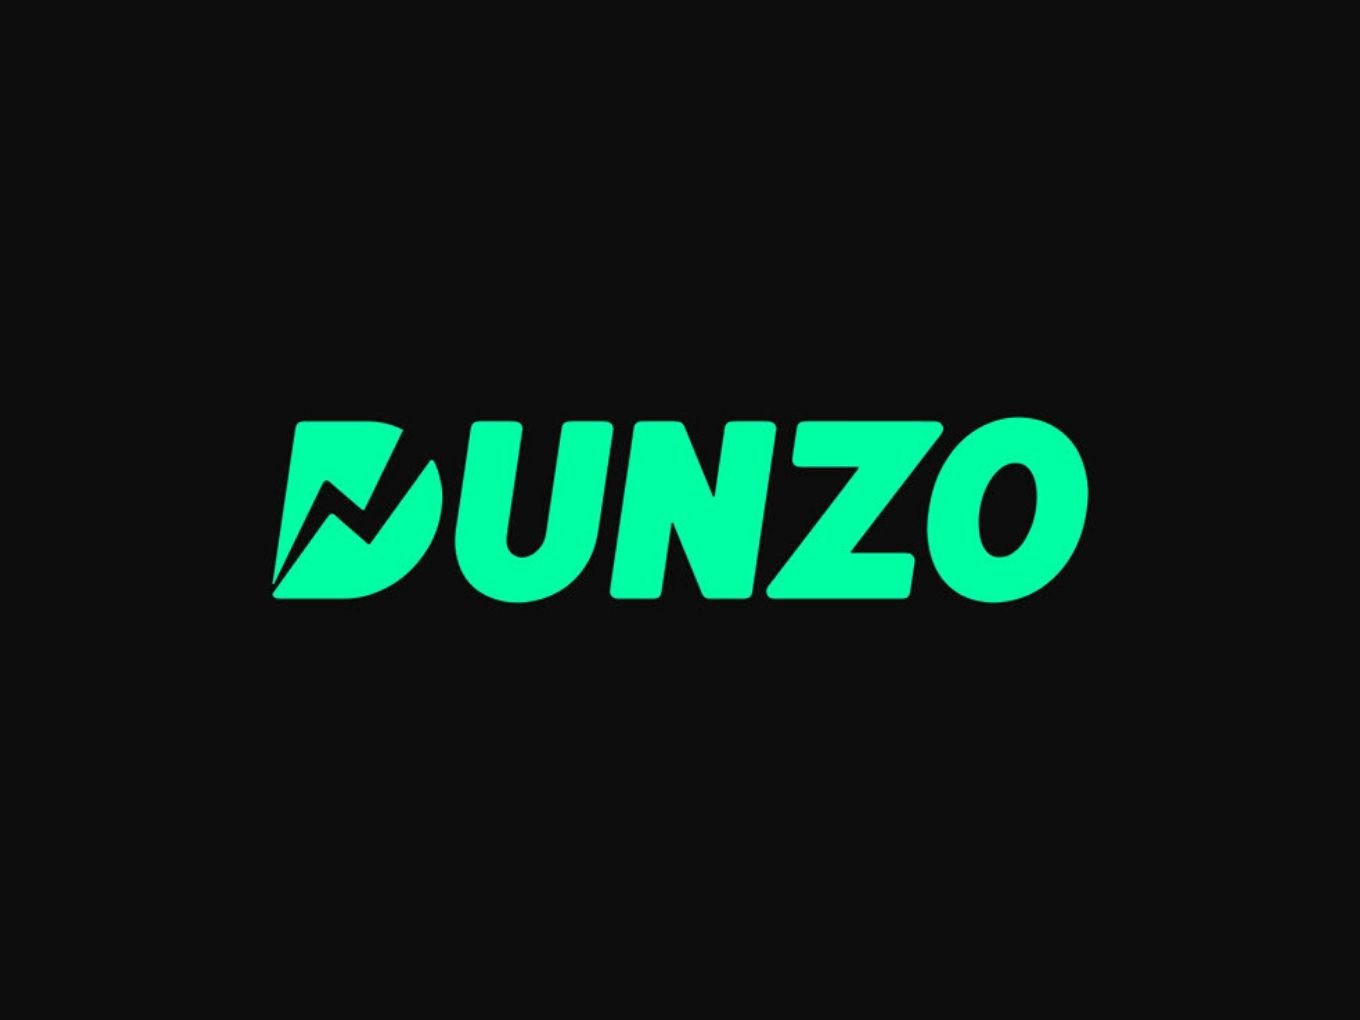 Dunzo Raises 34 Cr Funding To Fend Off Swiggy Challenge